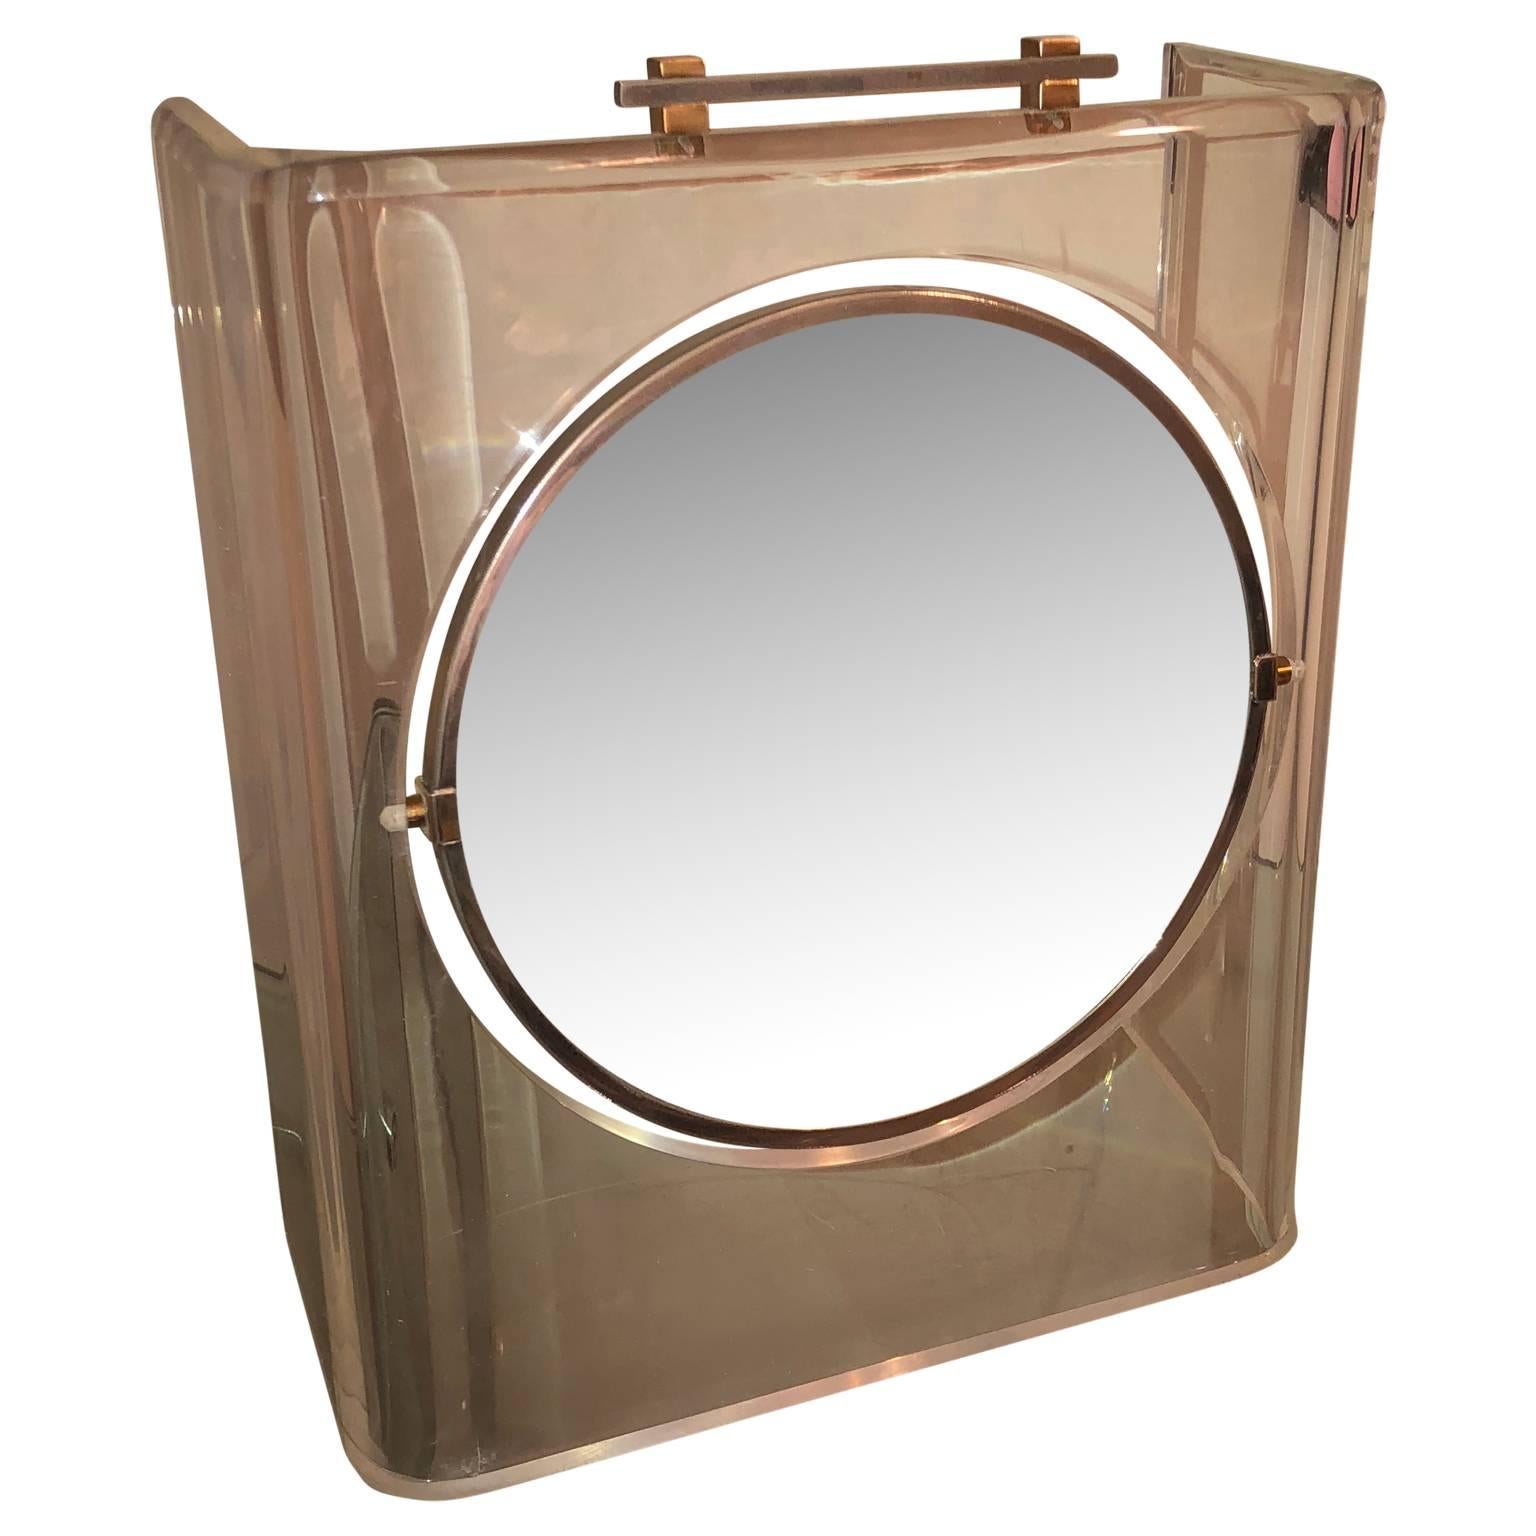 Italian Mid-Century Modern Lucite chrome and brass vanity table mirror.